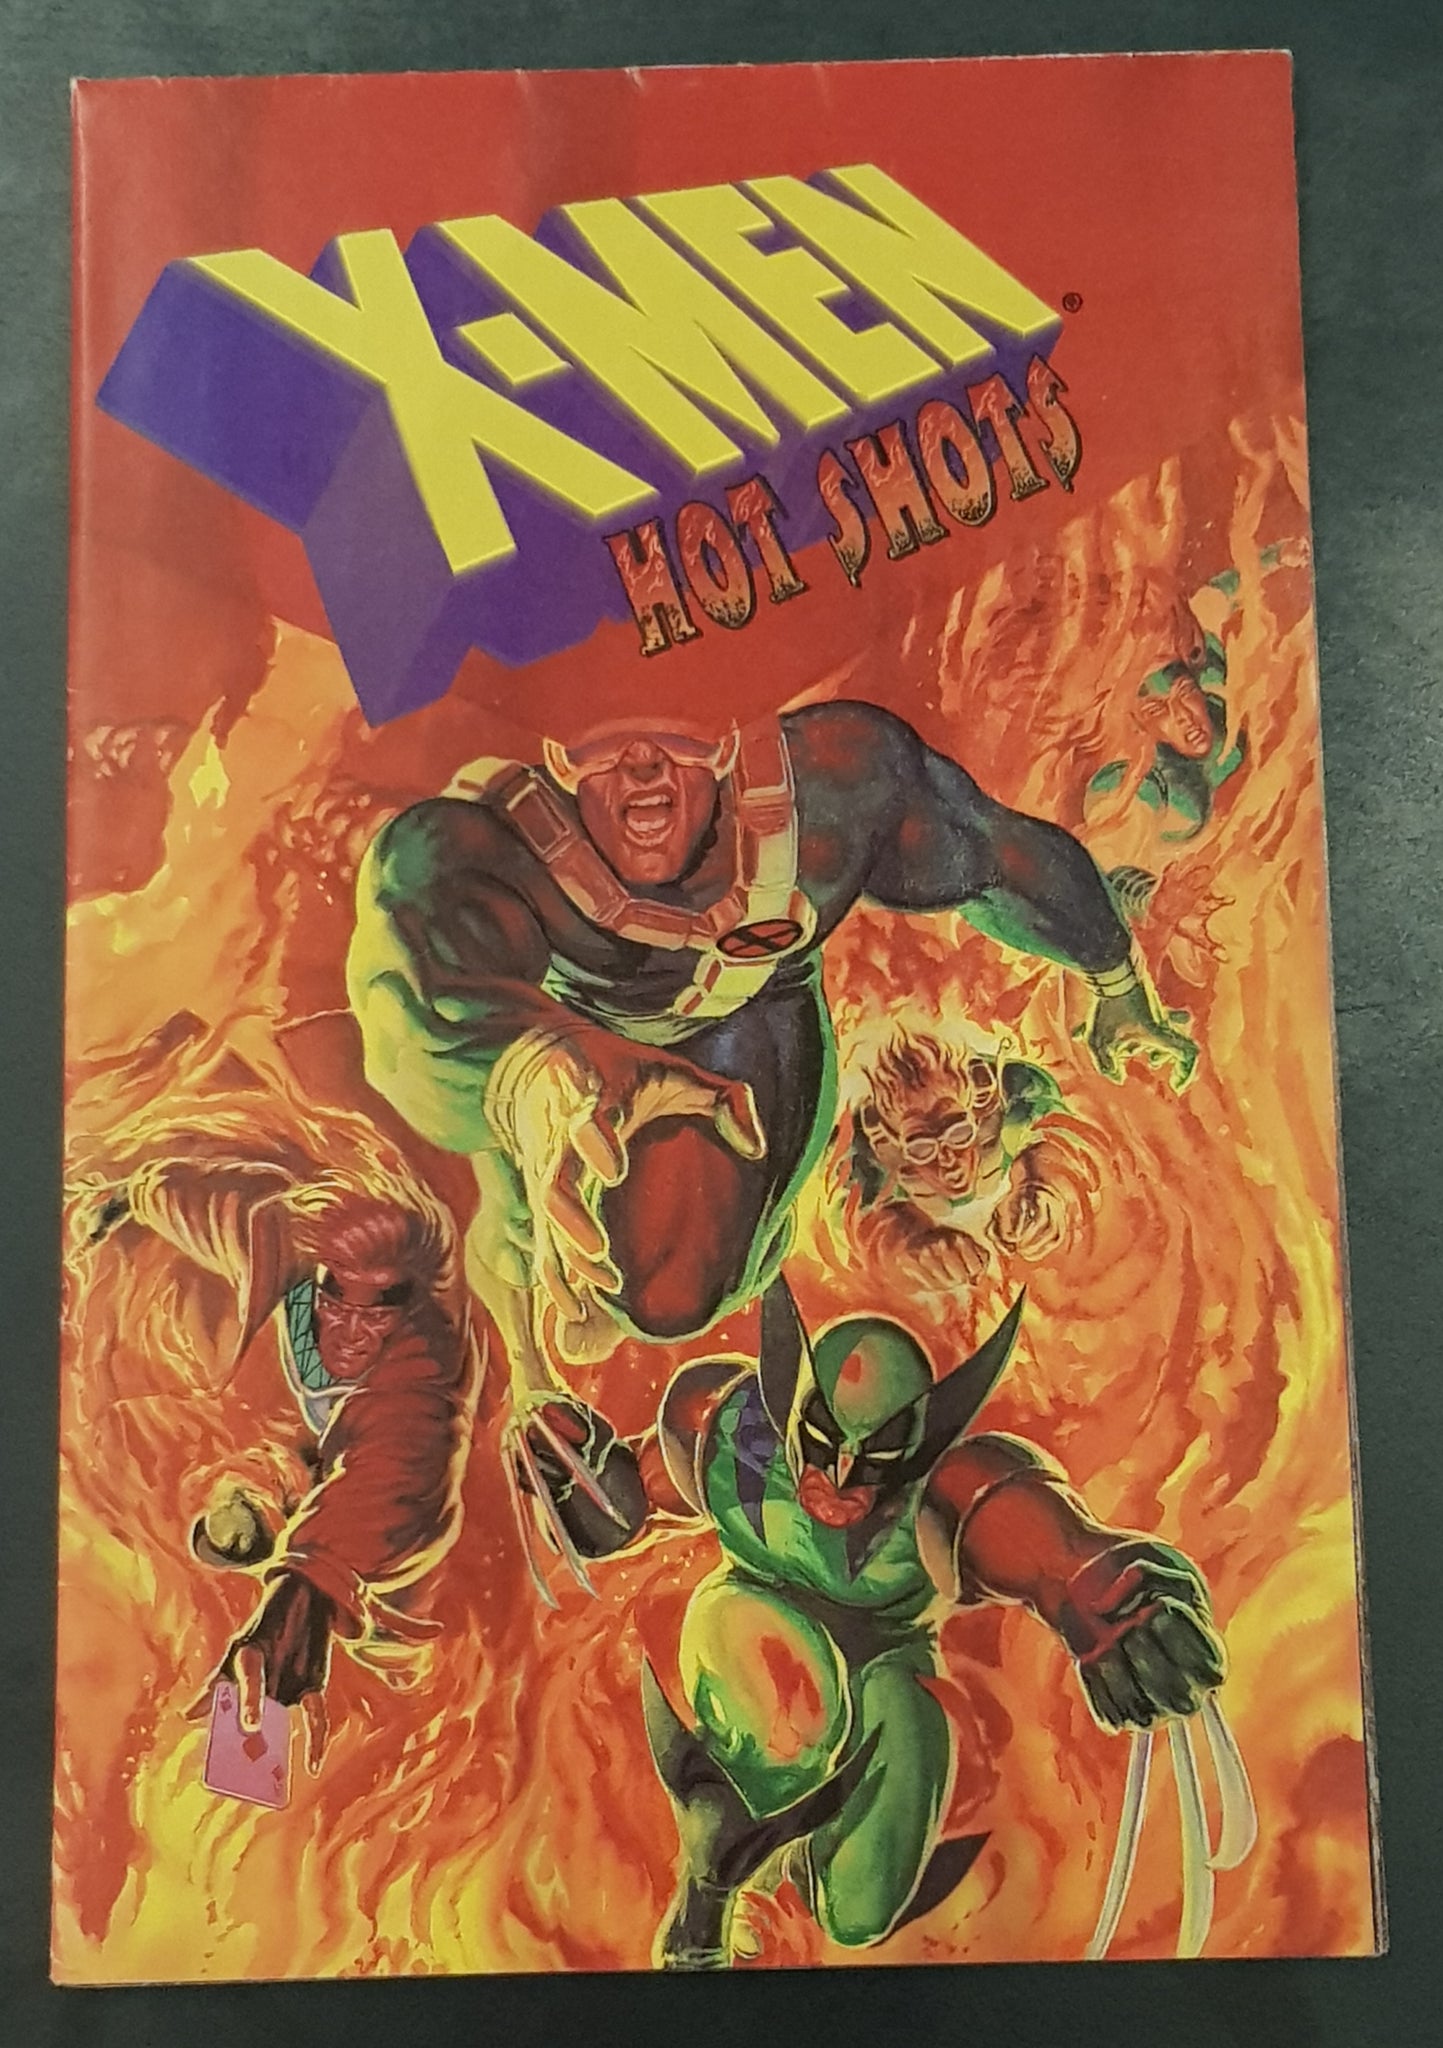 X-Men Hot Shots #1 VF+ (Poster Book)